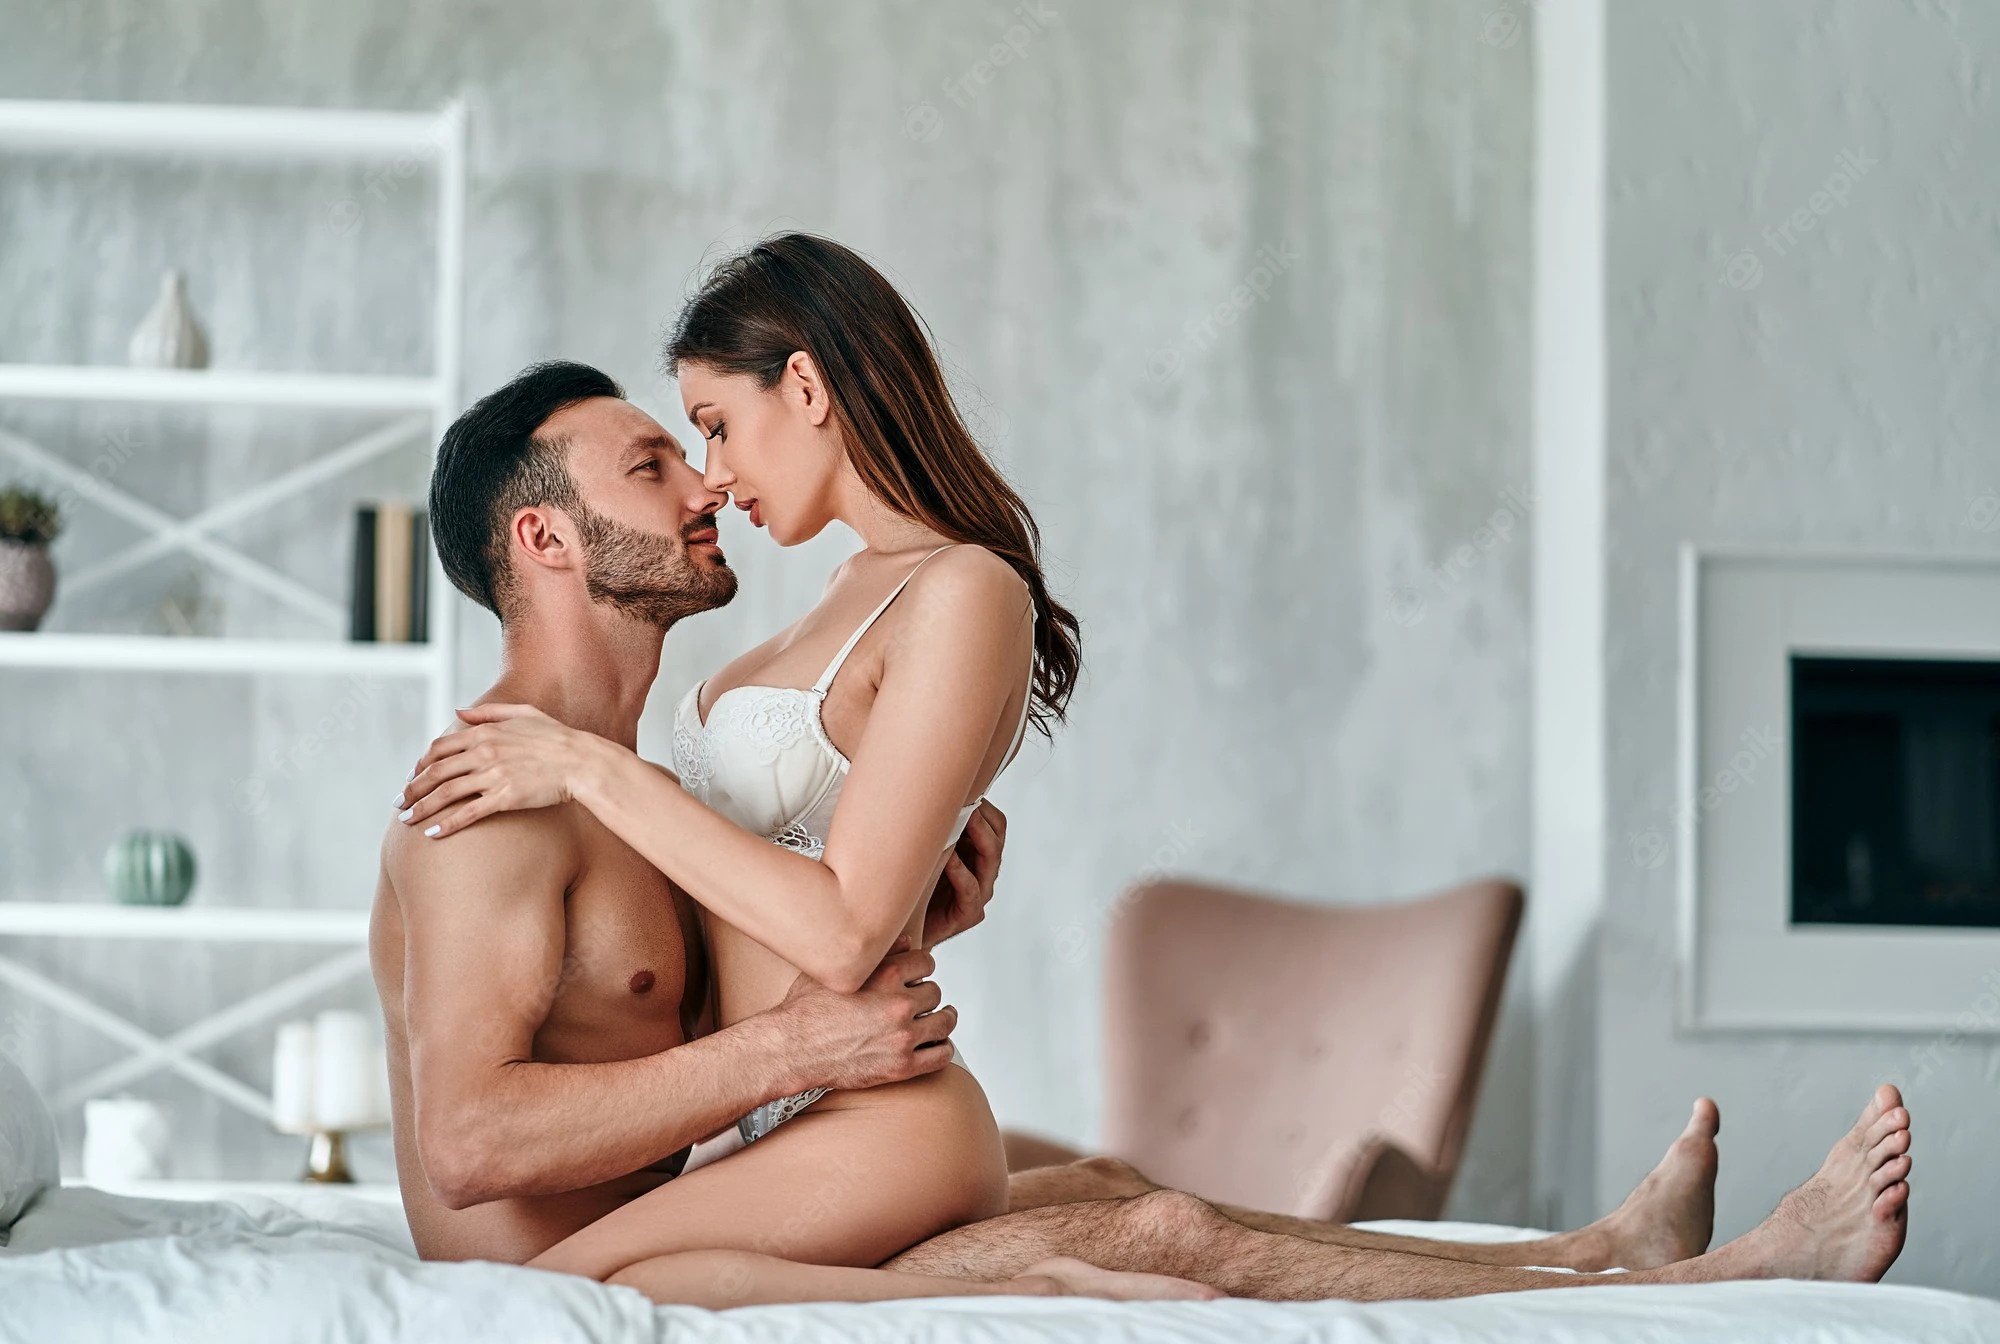 Best Of The Best - Top 2 Best Sites To Watch Romantic Porn Videos 2022